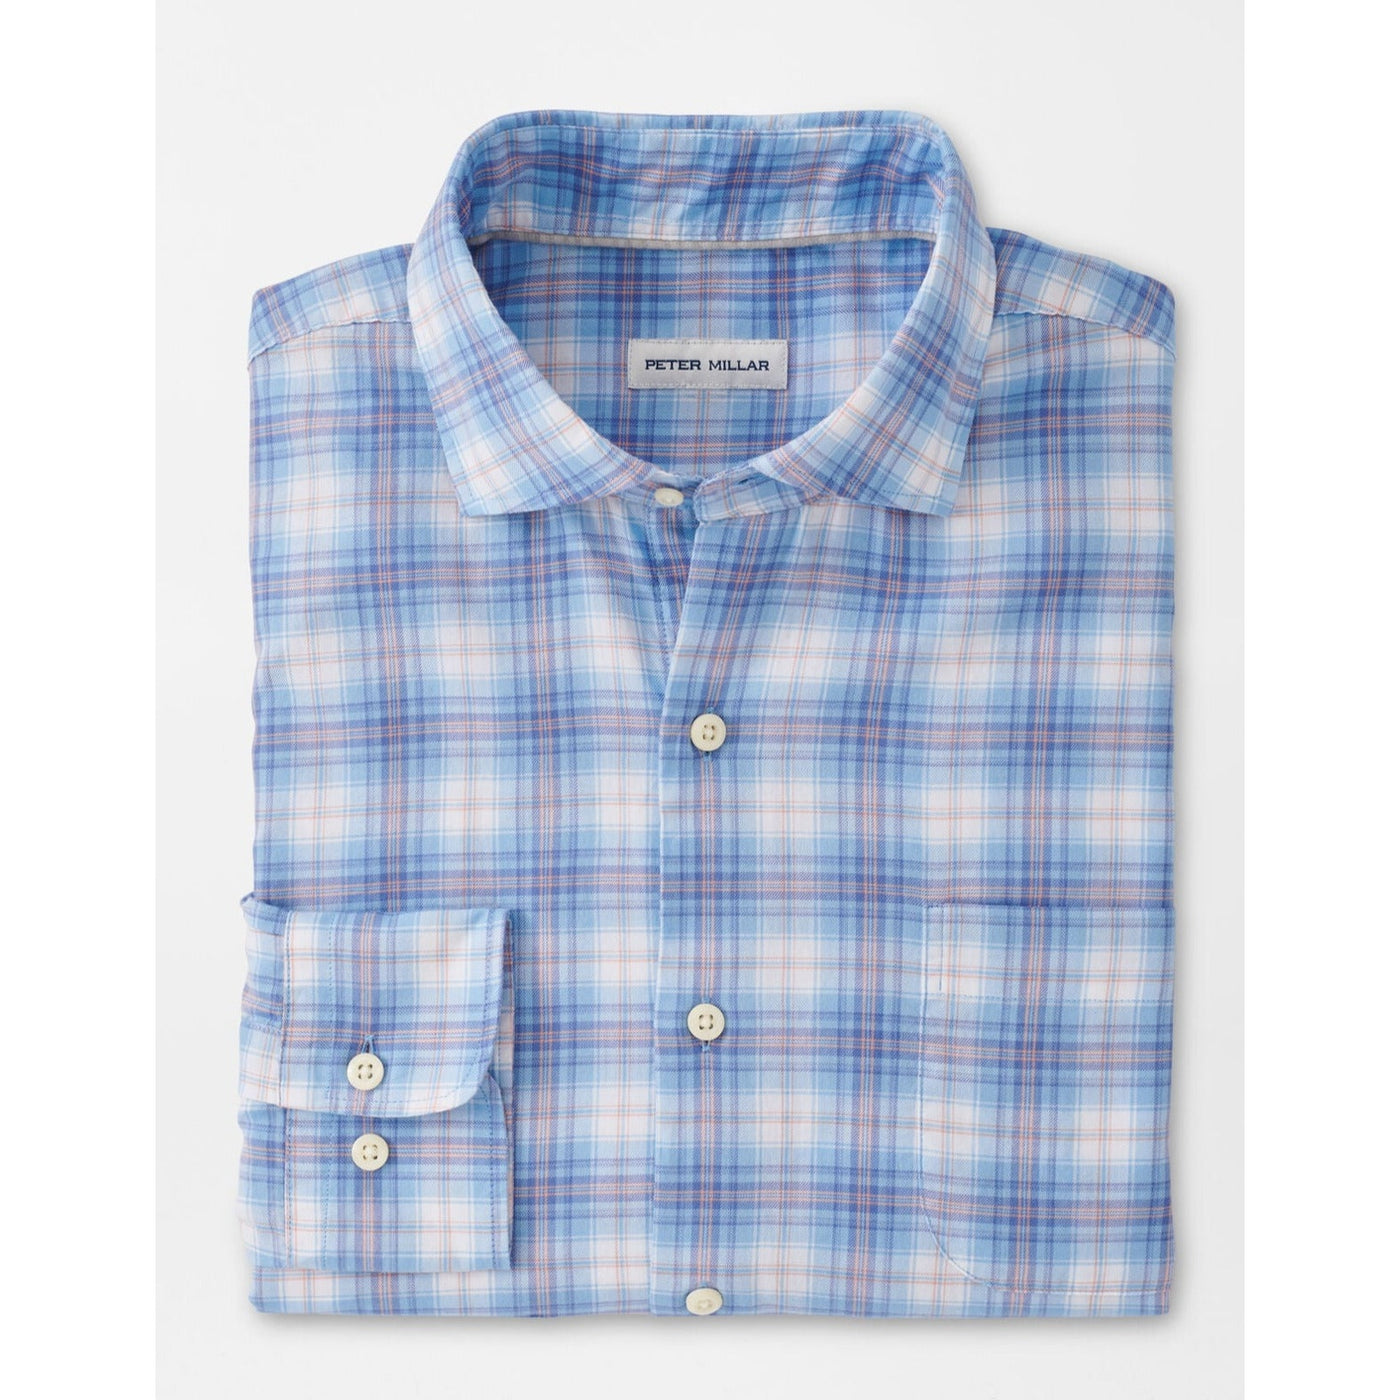 Peter Millar Wester Summer Soft Cotton Sport Shirt-Men's Clothing-Kevin's Fine Outdoor Gear & Apparel